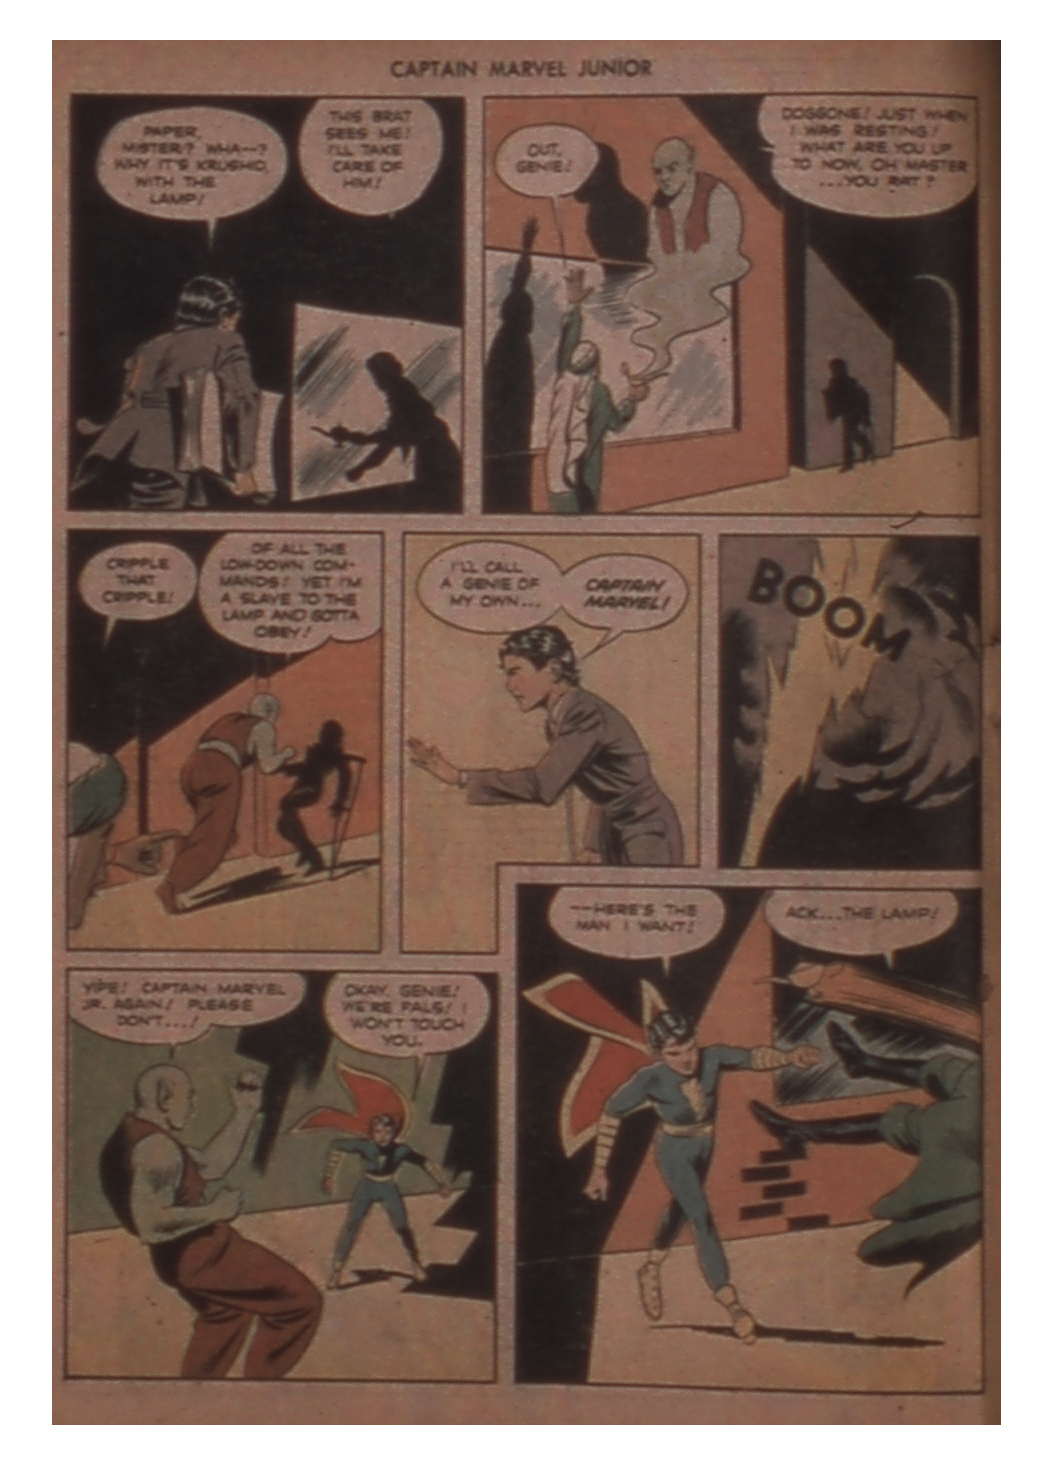 Read online Captain Marvel, Jr. comic -  Issue #18 - 26